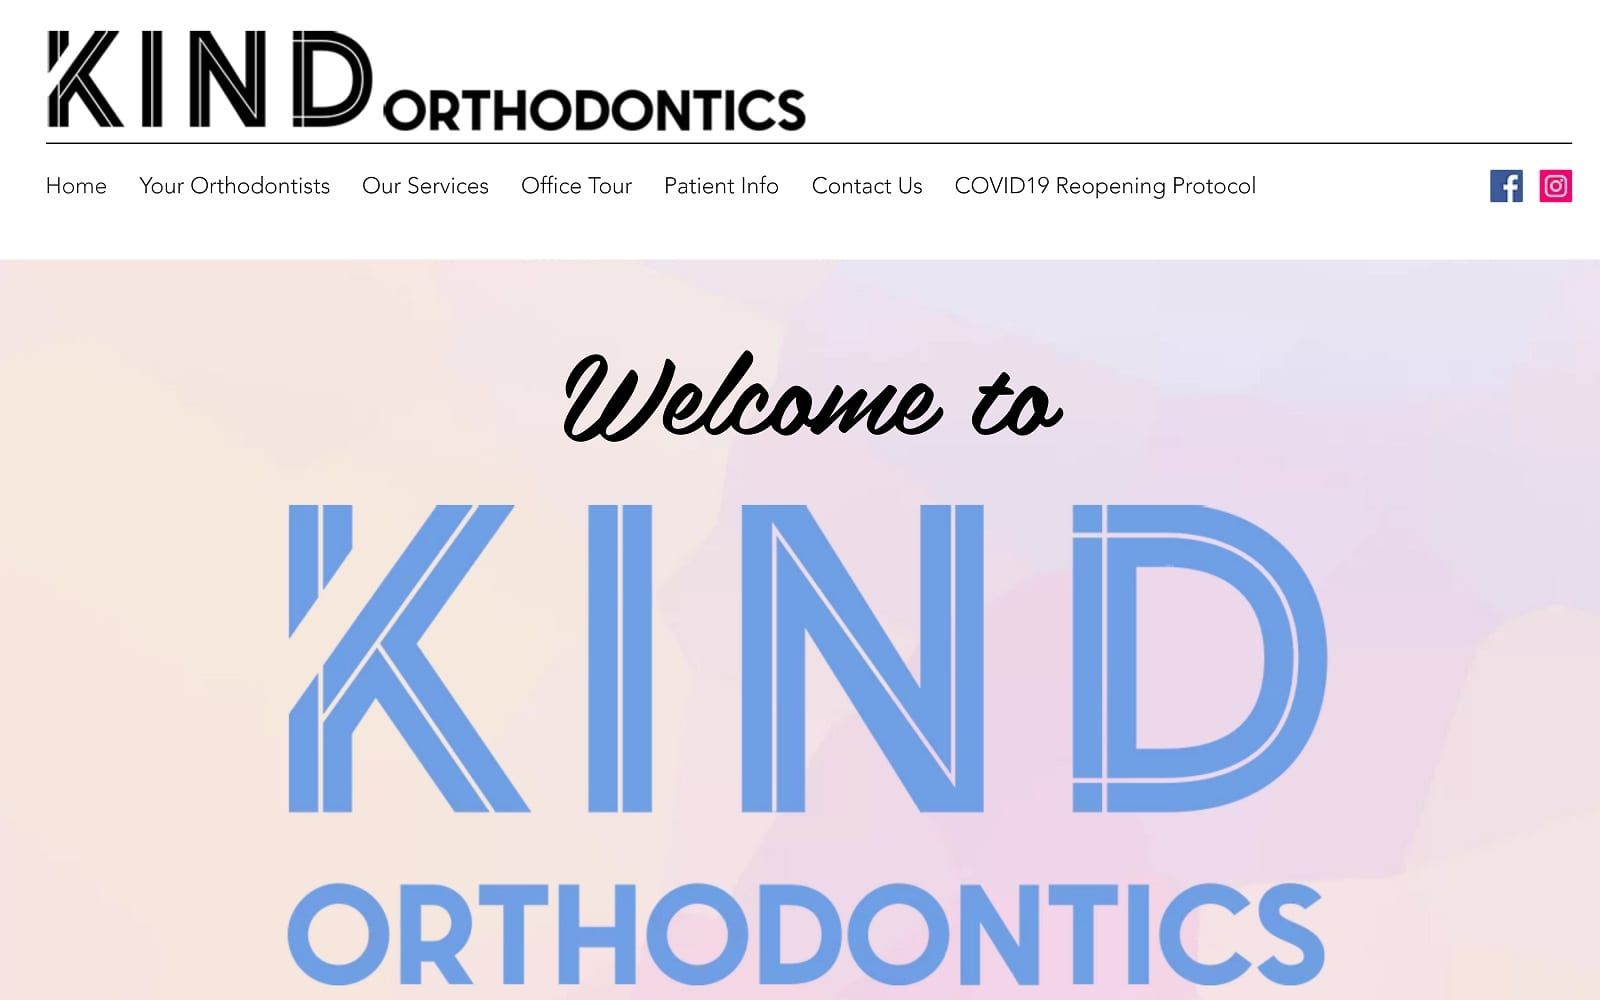 The screenshot of kind orthodontics kindortho. Com website